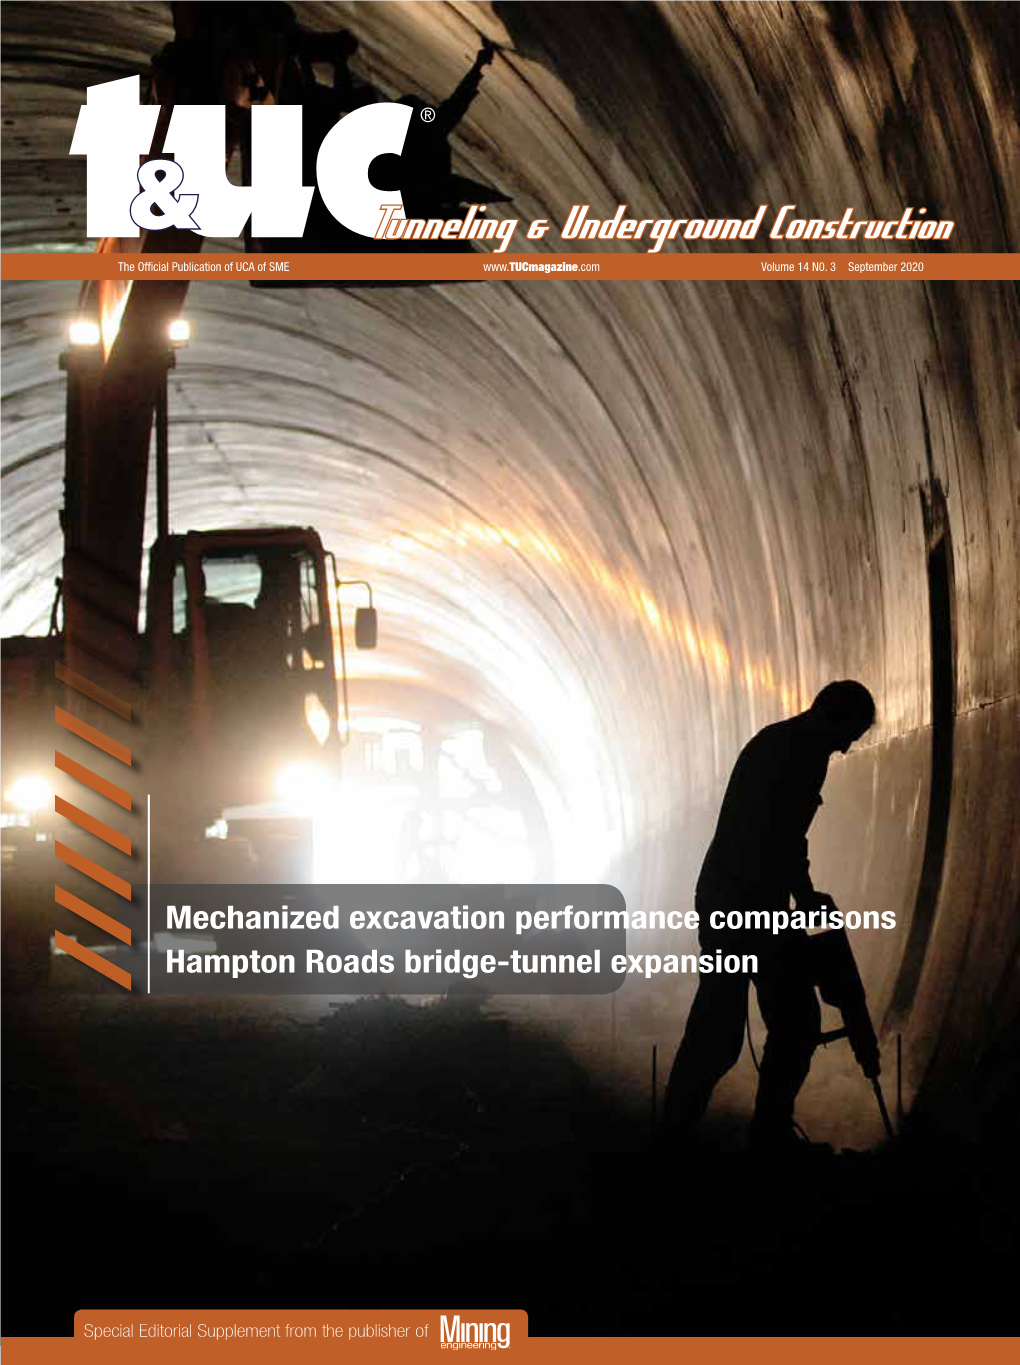 Tunneling & Underground Construction